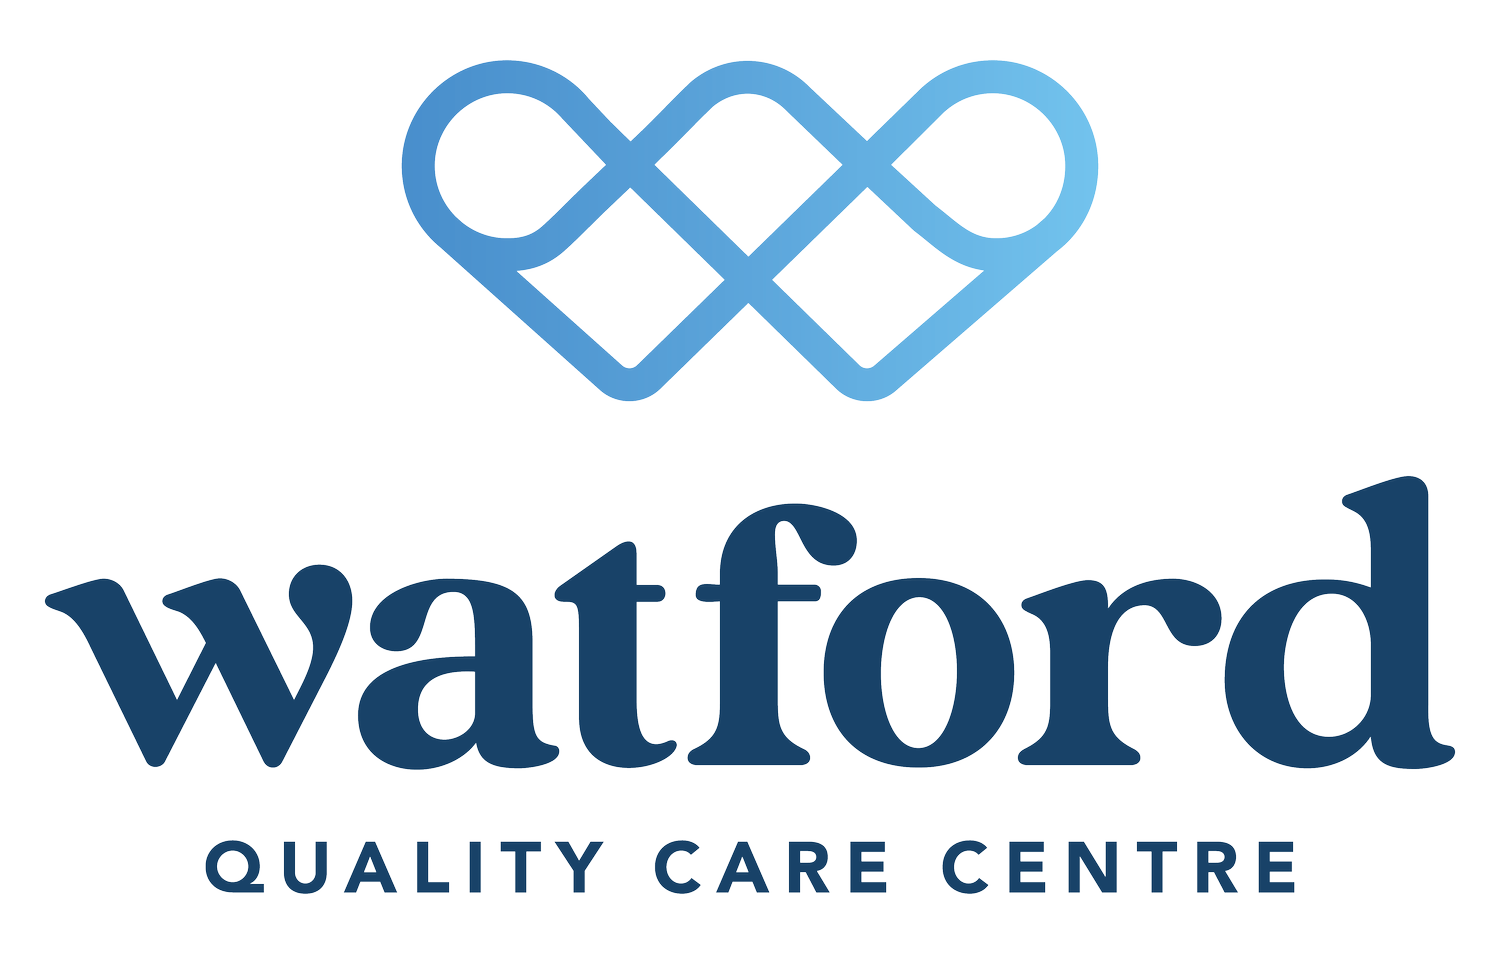 Watford Quality Care Centre